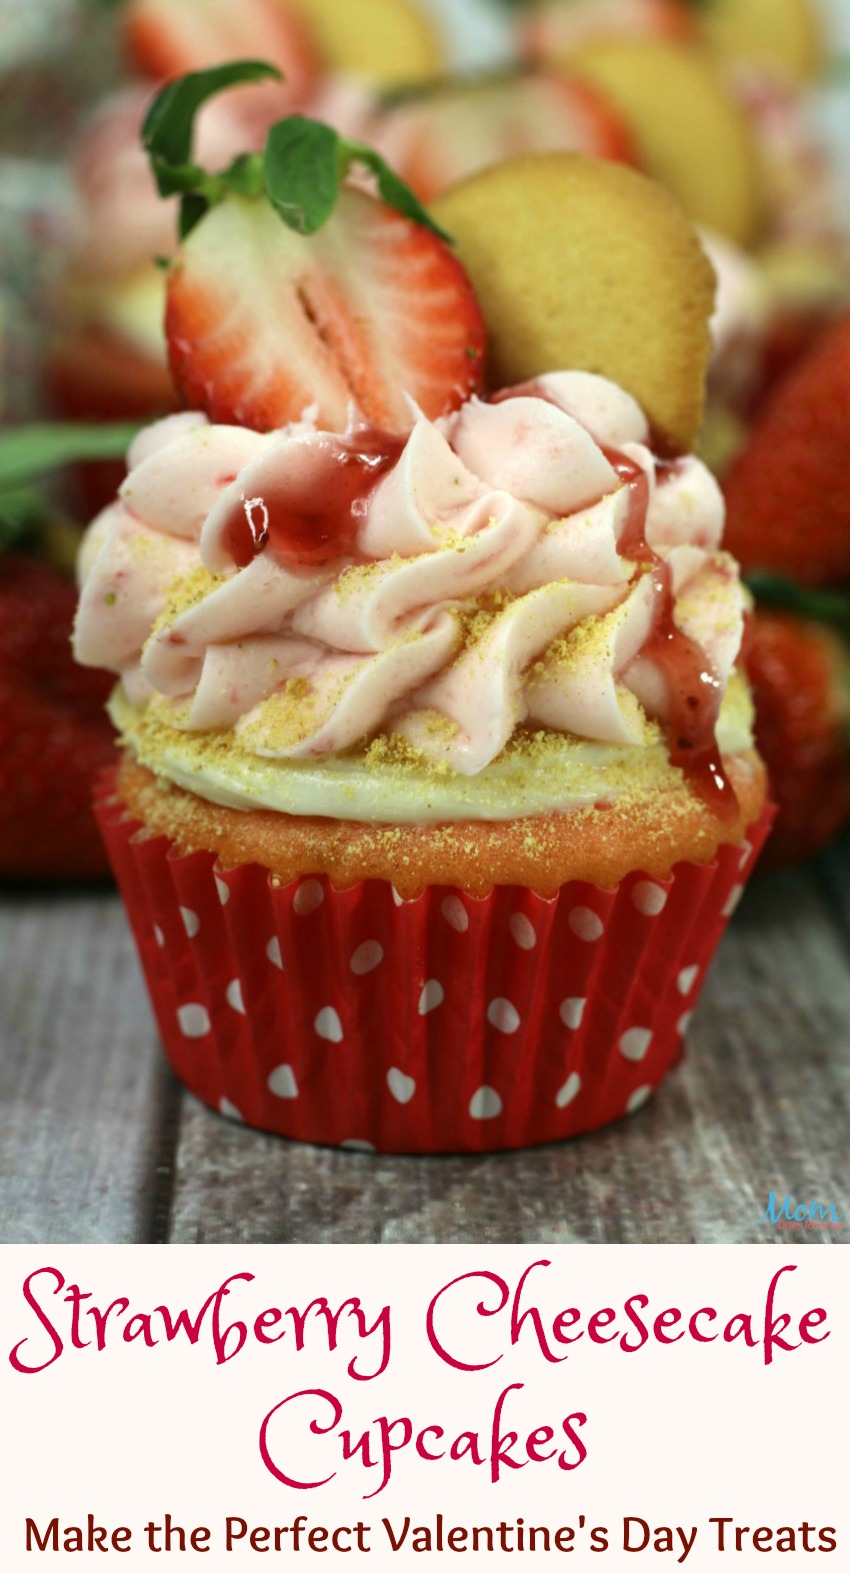 Strawberry Cheesecake Cupcakes Make the Perfect Valentine's Day Treats #Sweet2019 #recipe #sweettreats #cupcakes #valentinesday #strawberry #desserts